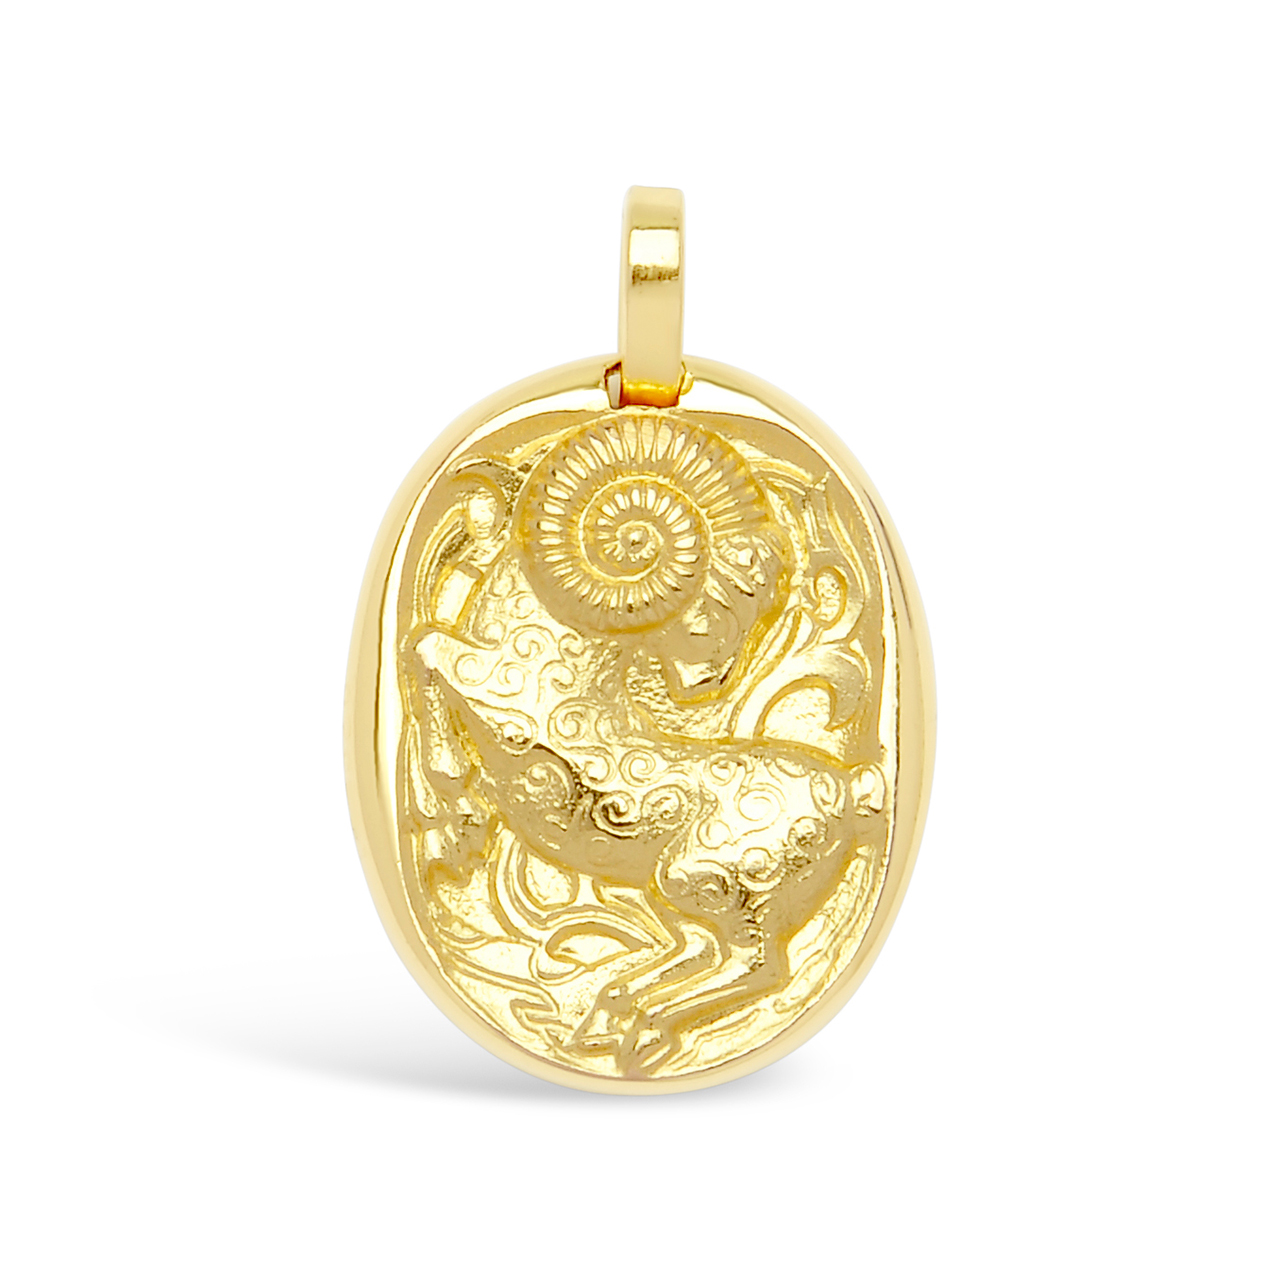 A Gold Astrological Pendant, Cartier 